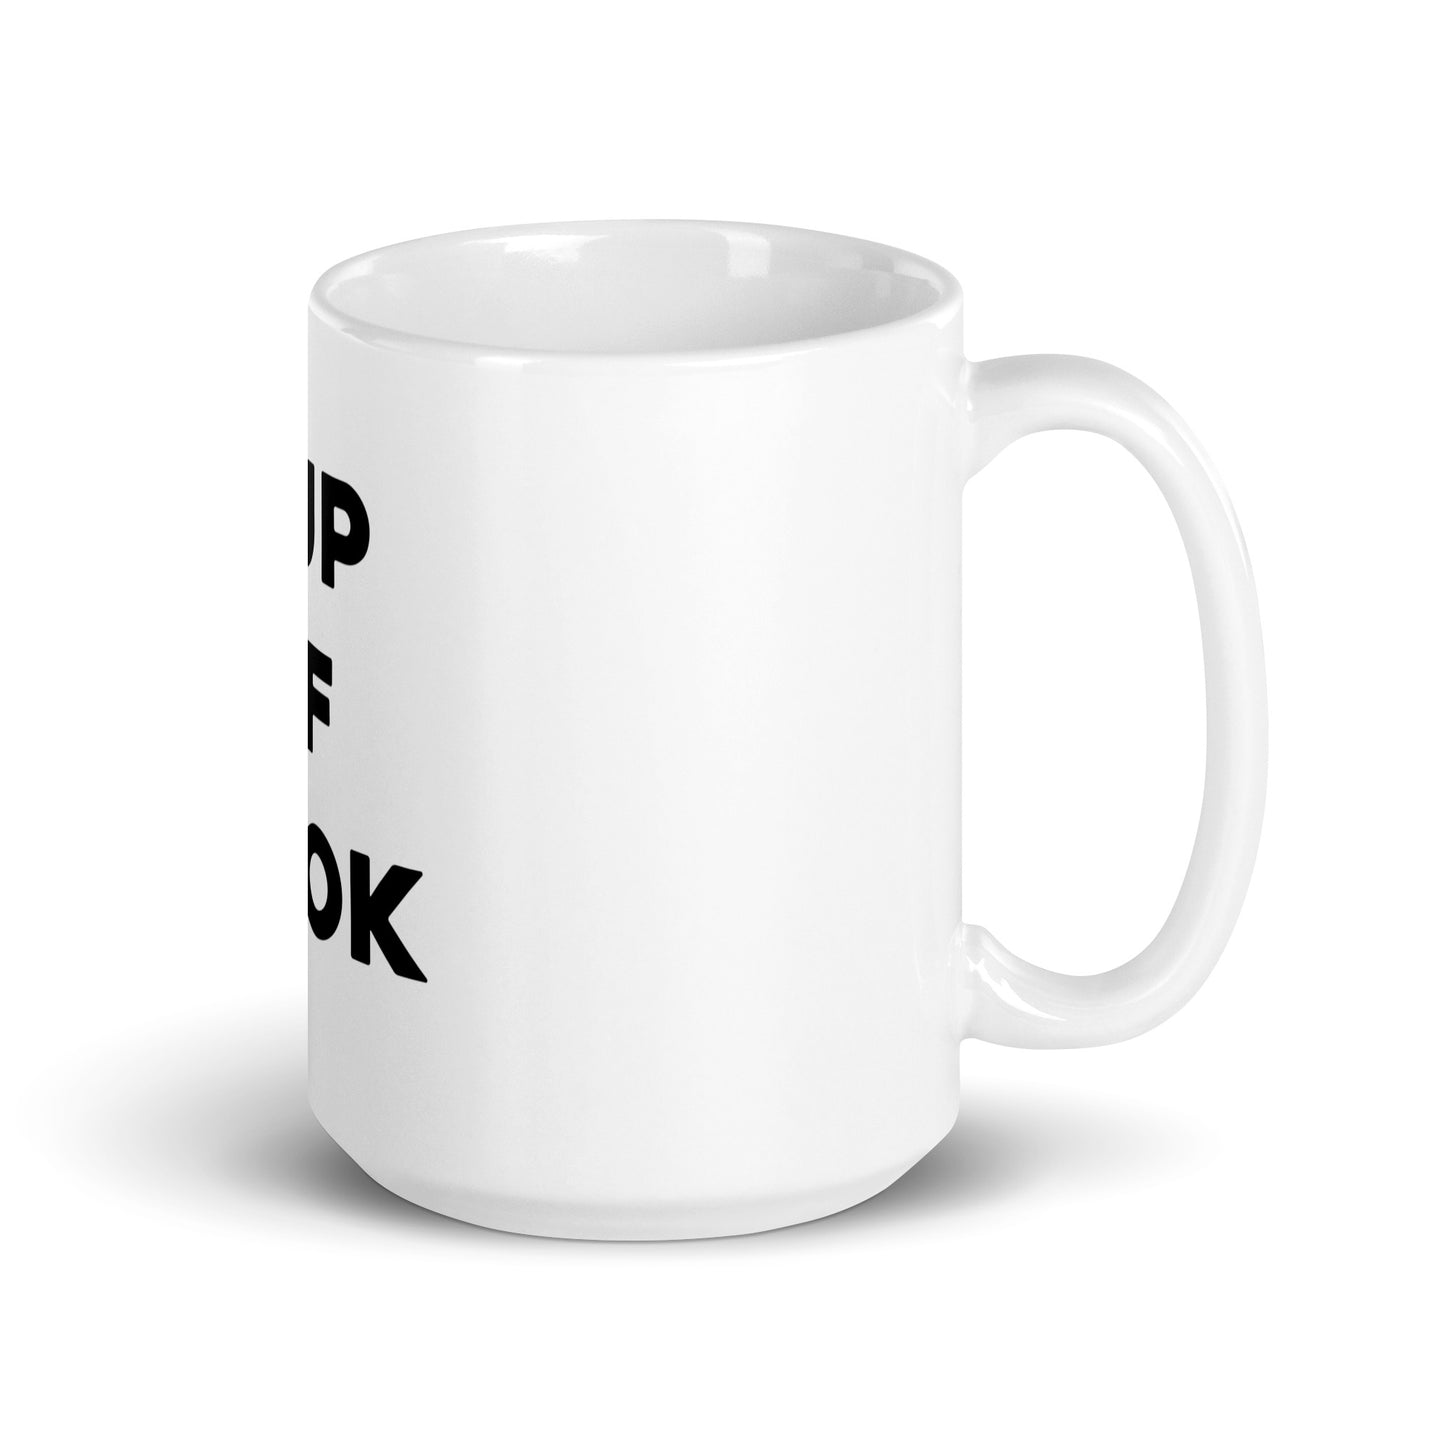 Kup of Kook Mug